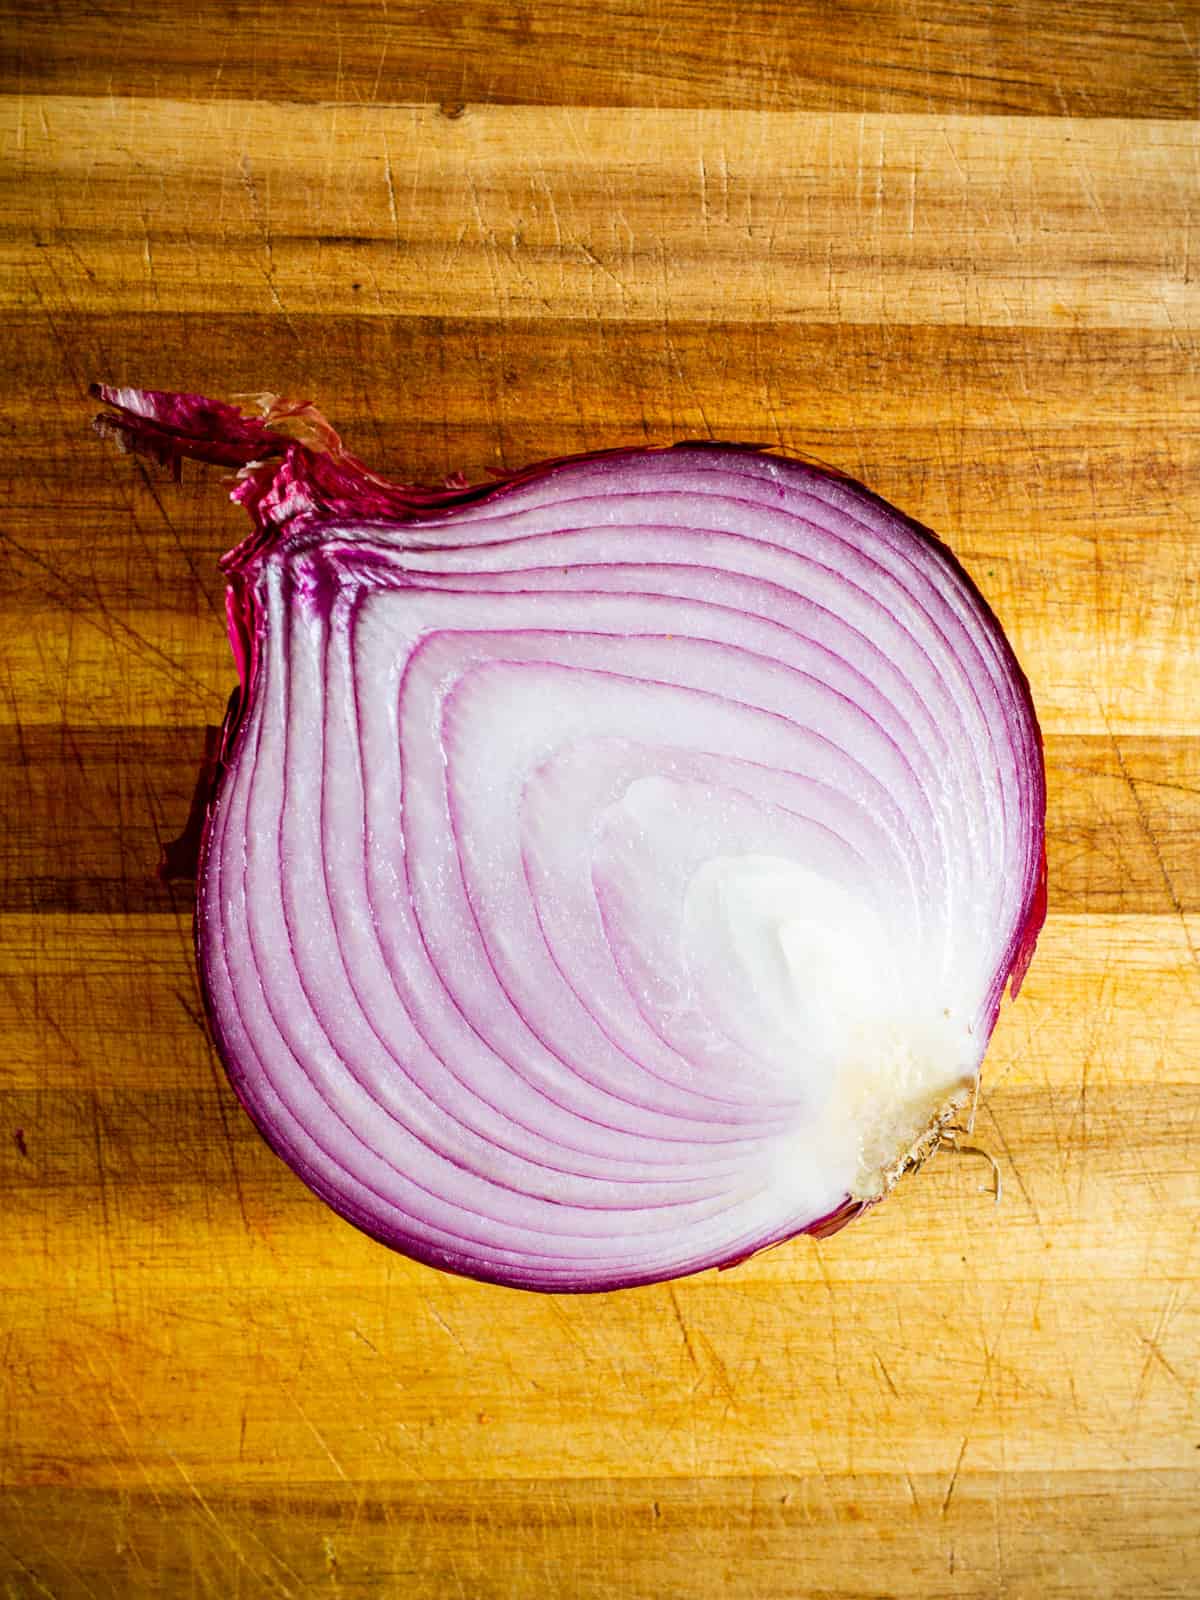 halved red onion.